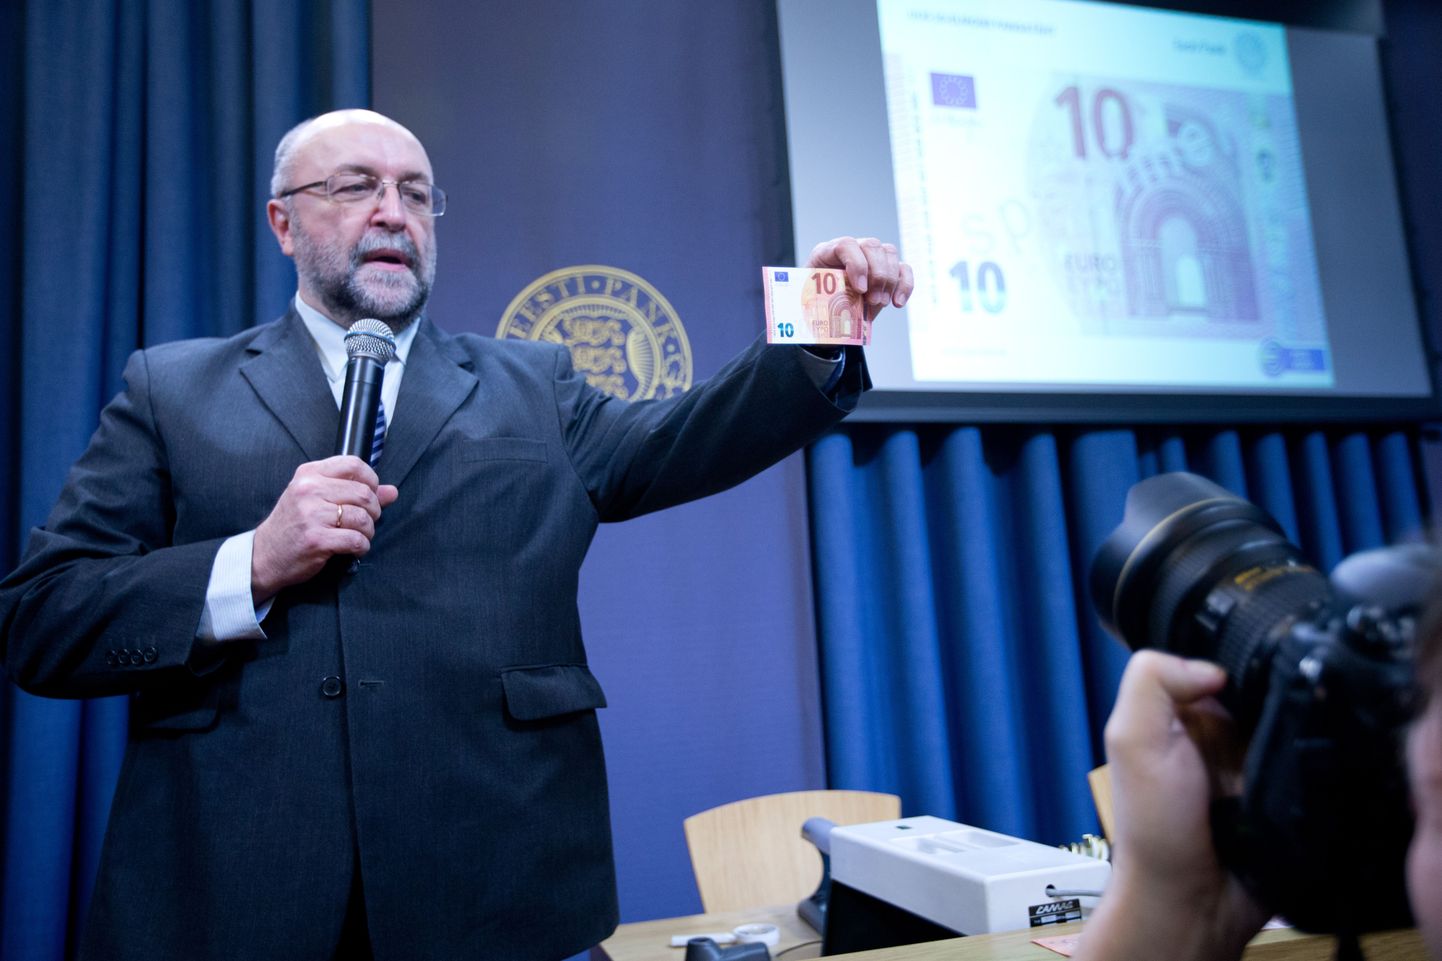 Eesti Panga sularaha- ja taristuosakonna juhataja Rait Roosve tutvustas uut 10-eurost rahatähte.